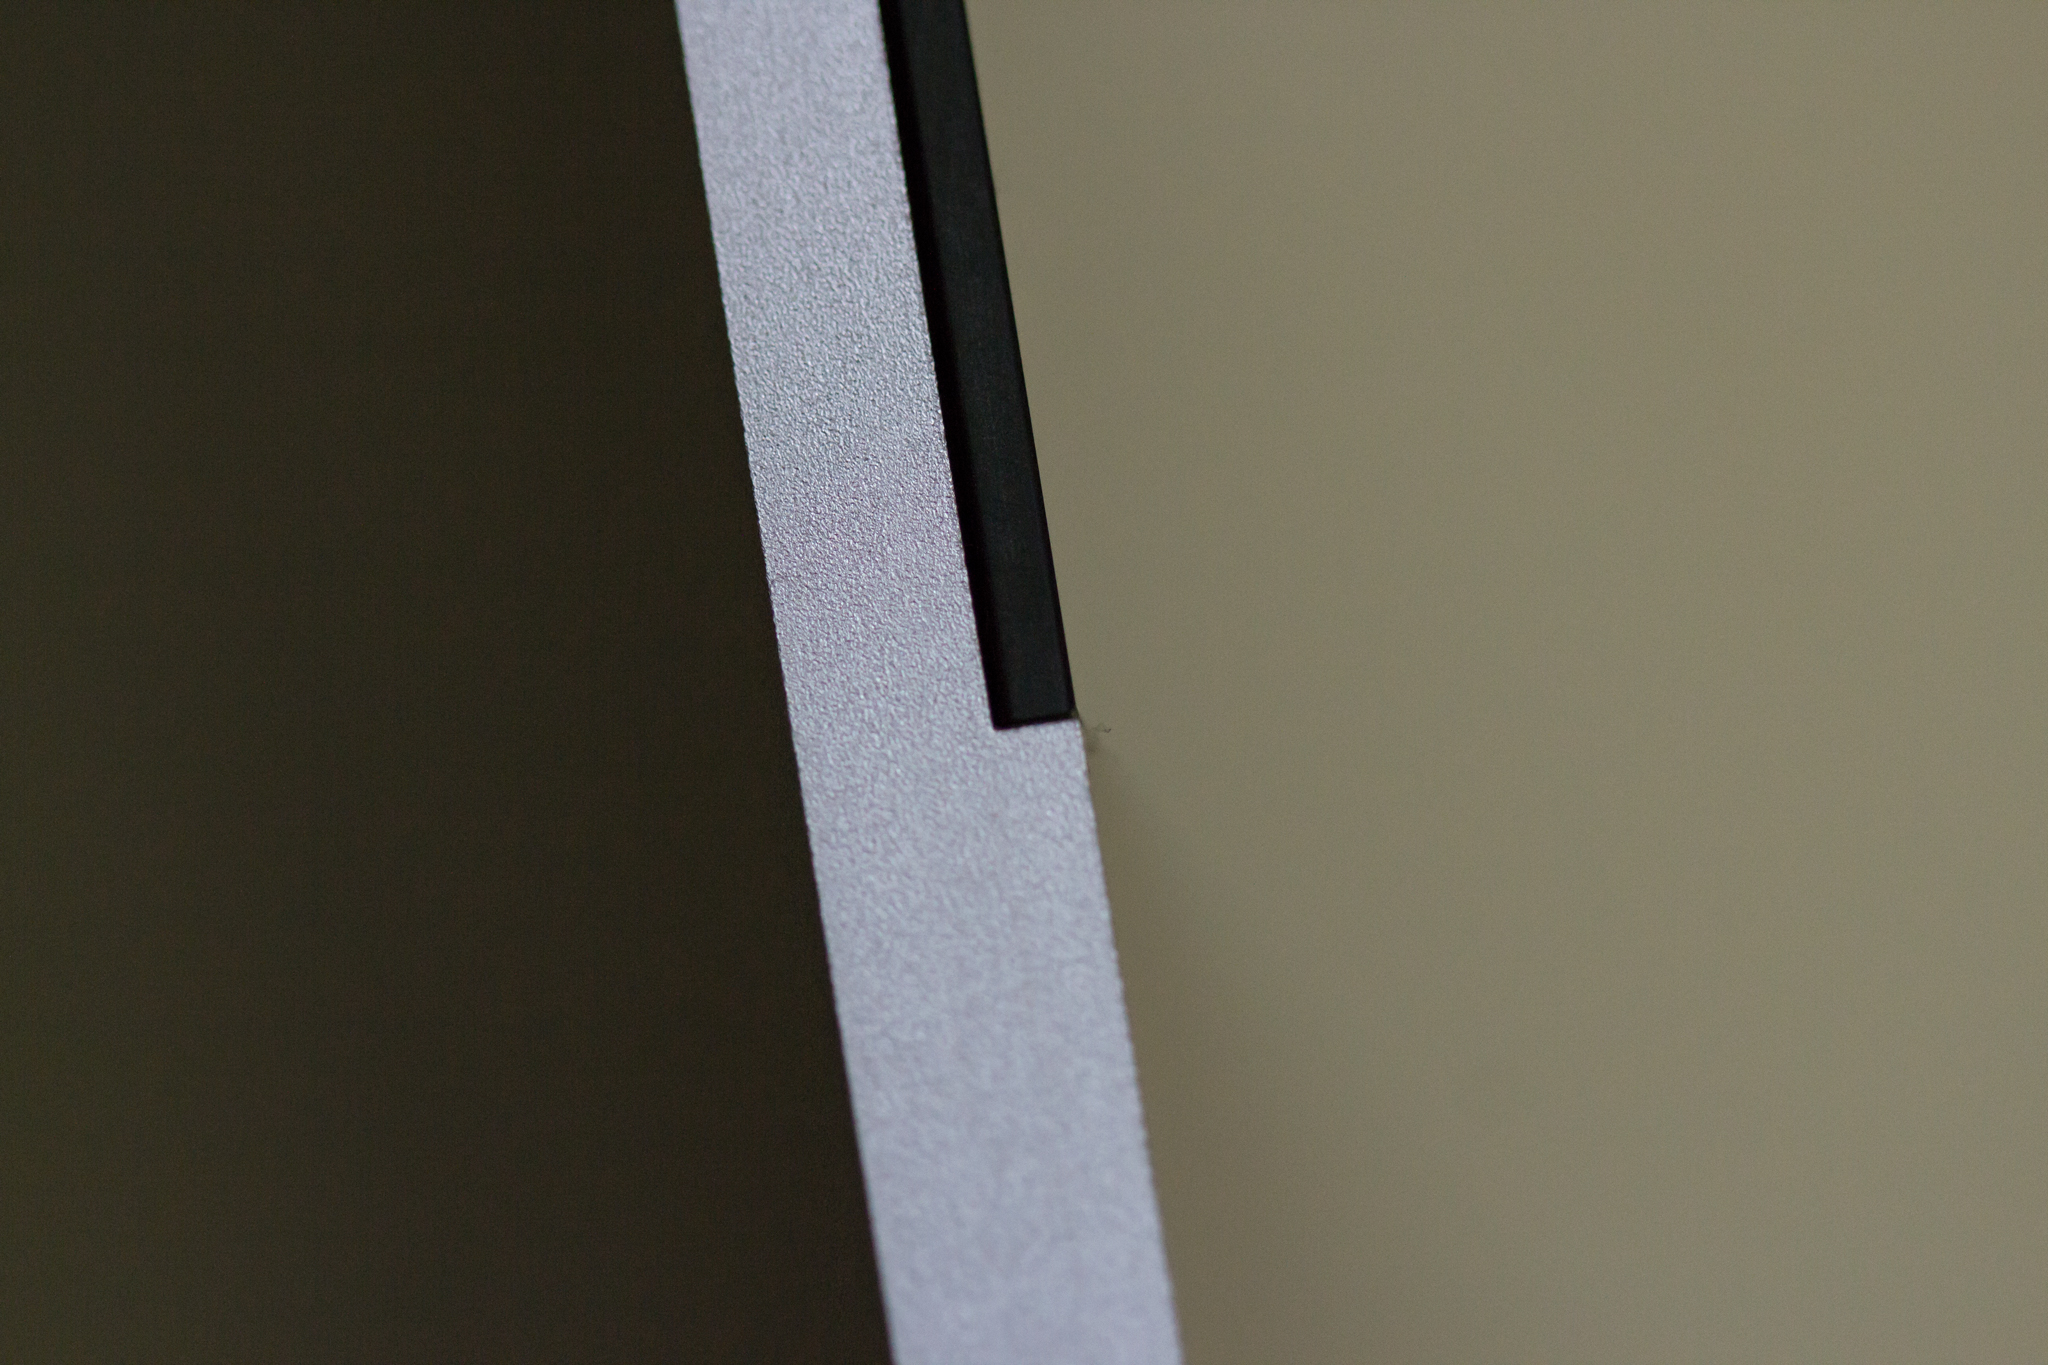 2012 iMac edge close-up